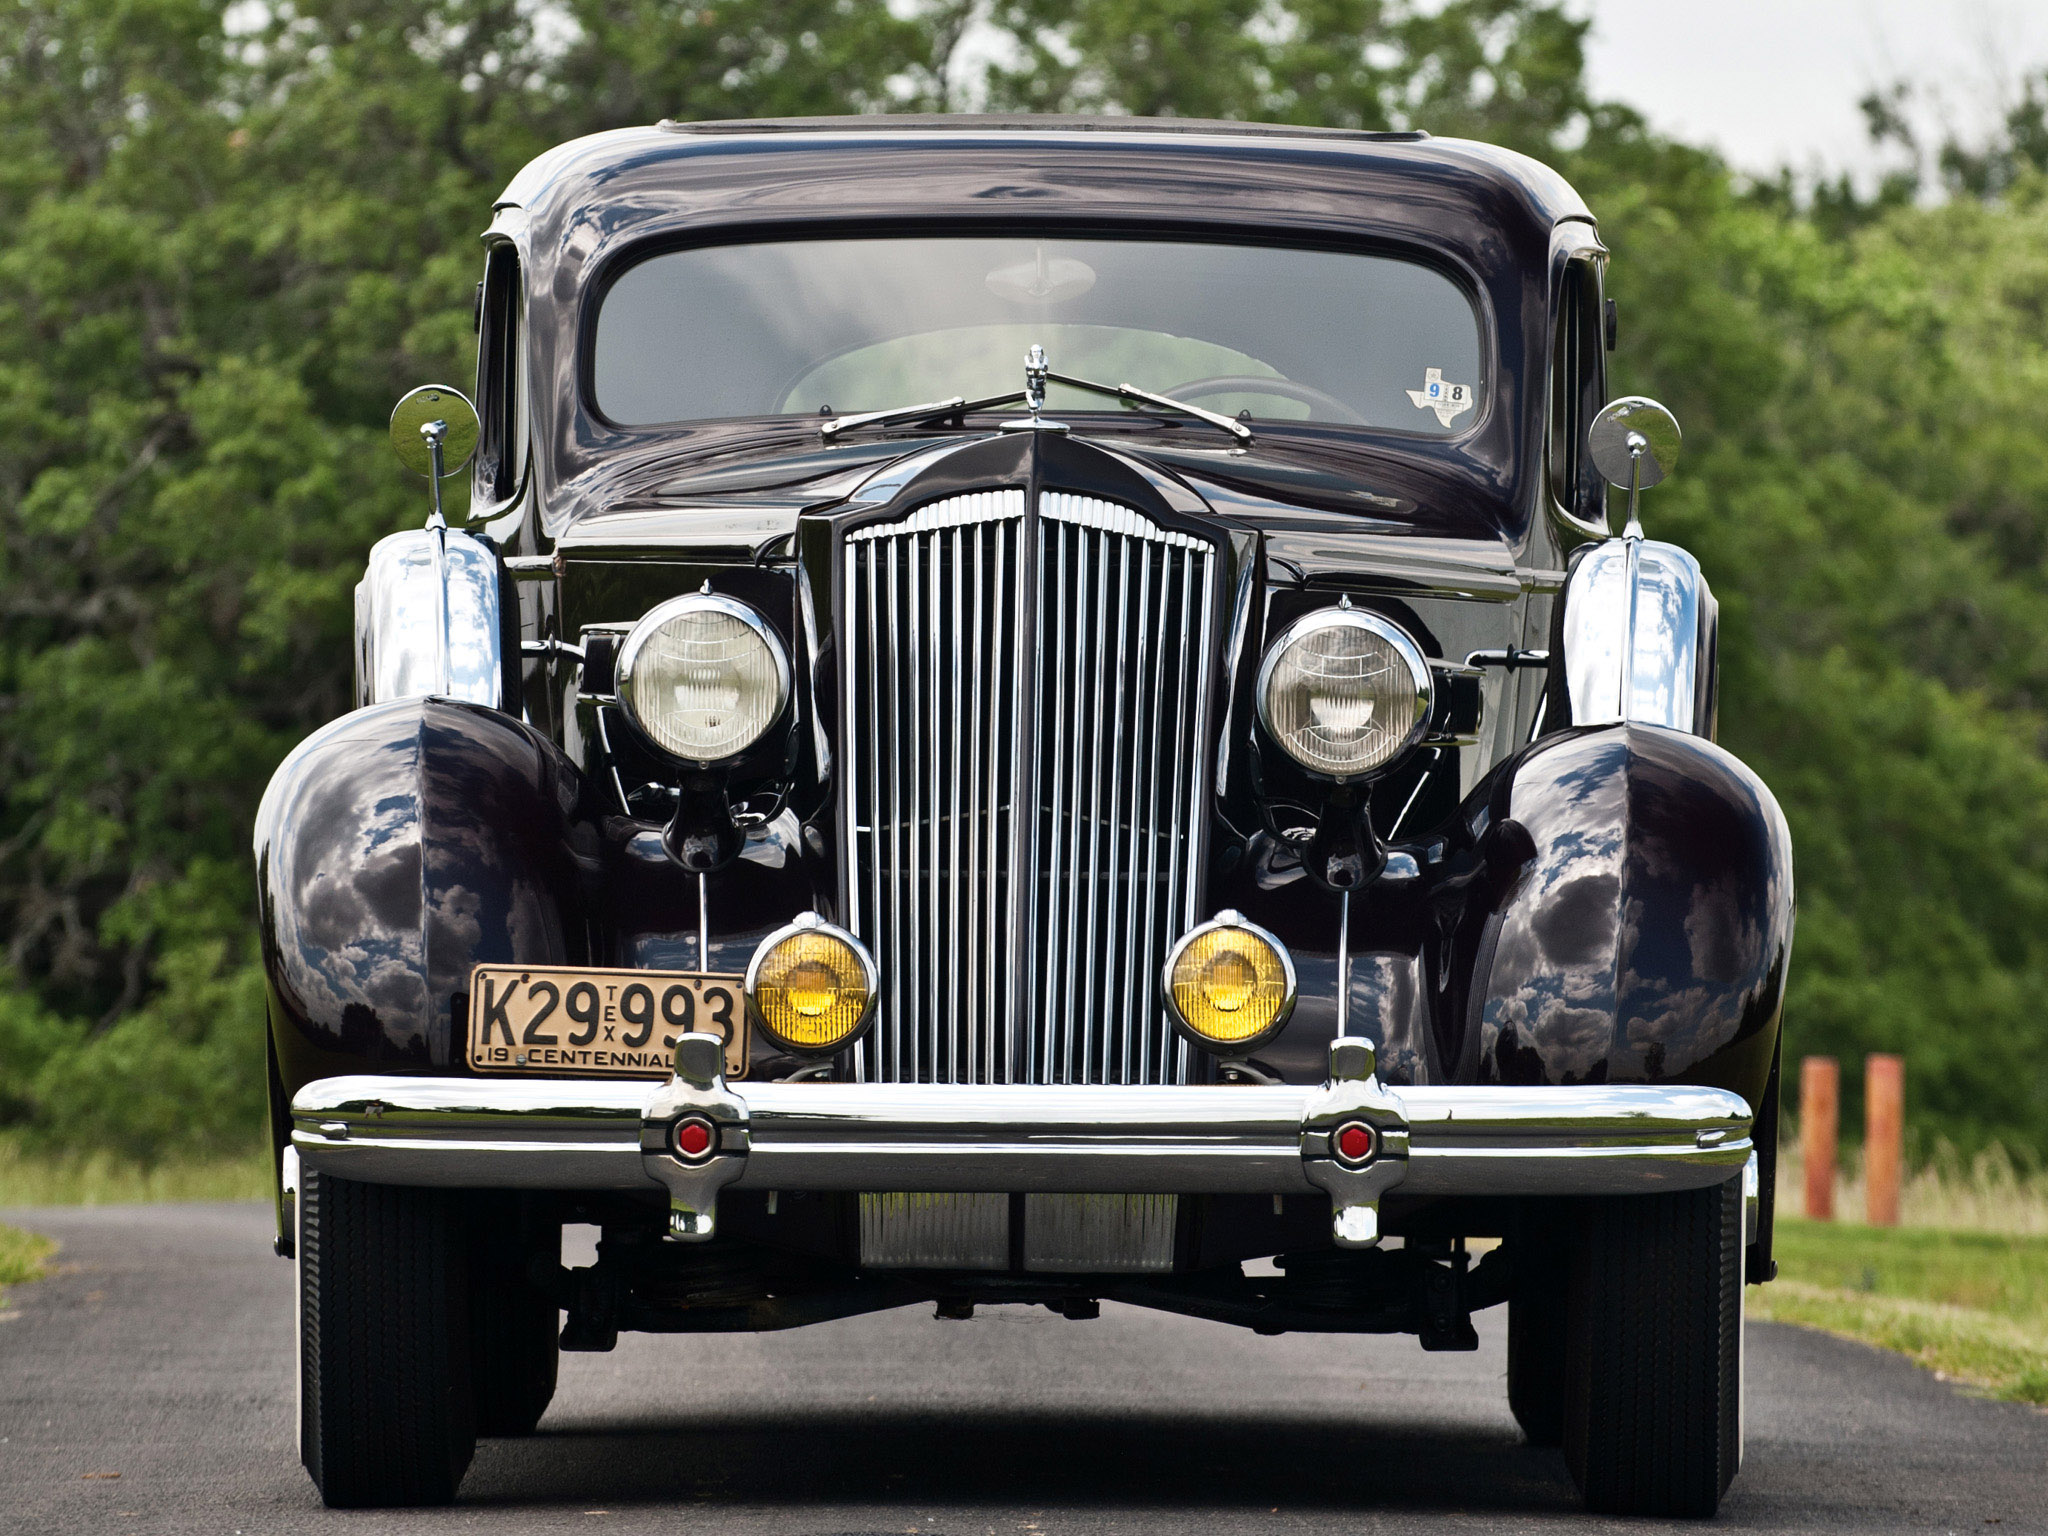 Packard 120 Sedan 1936